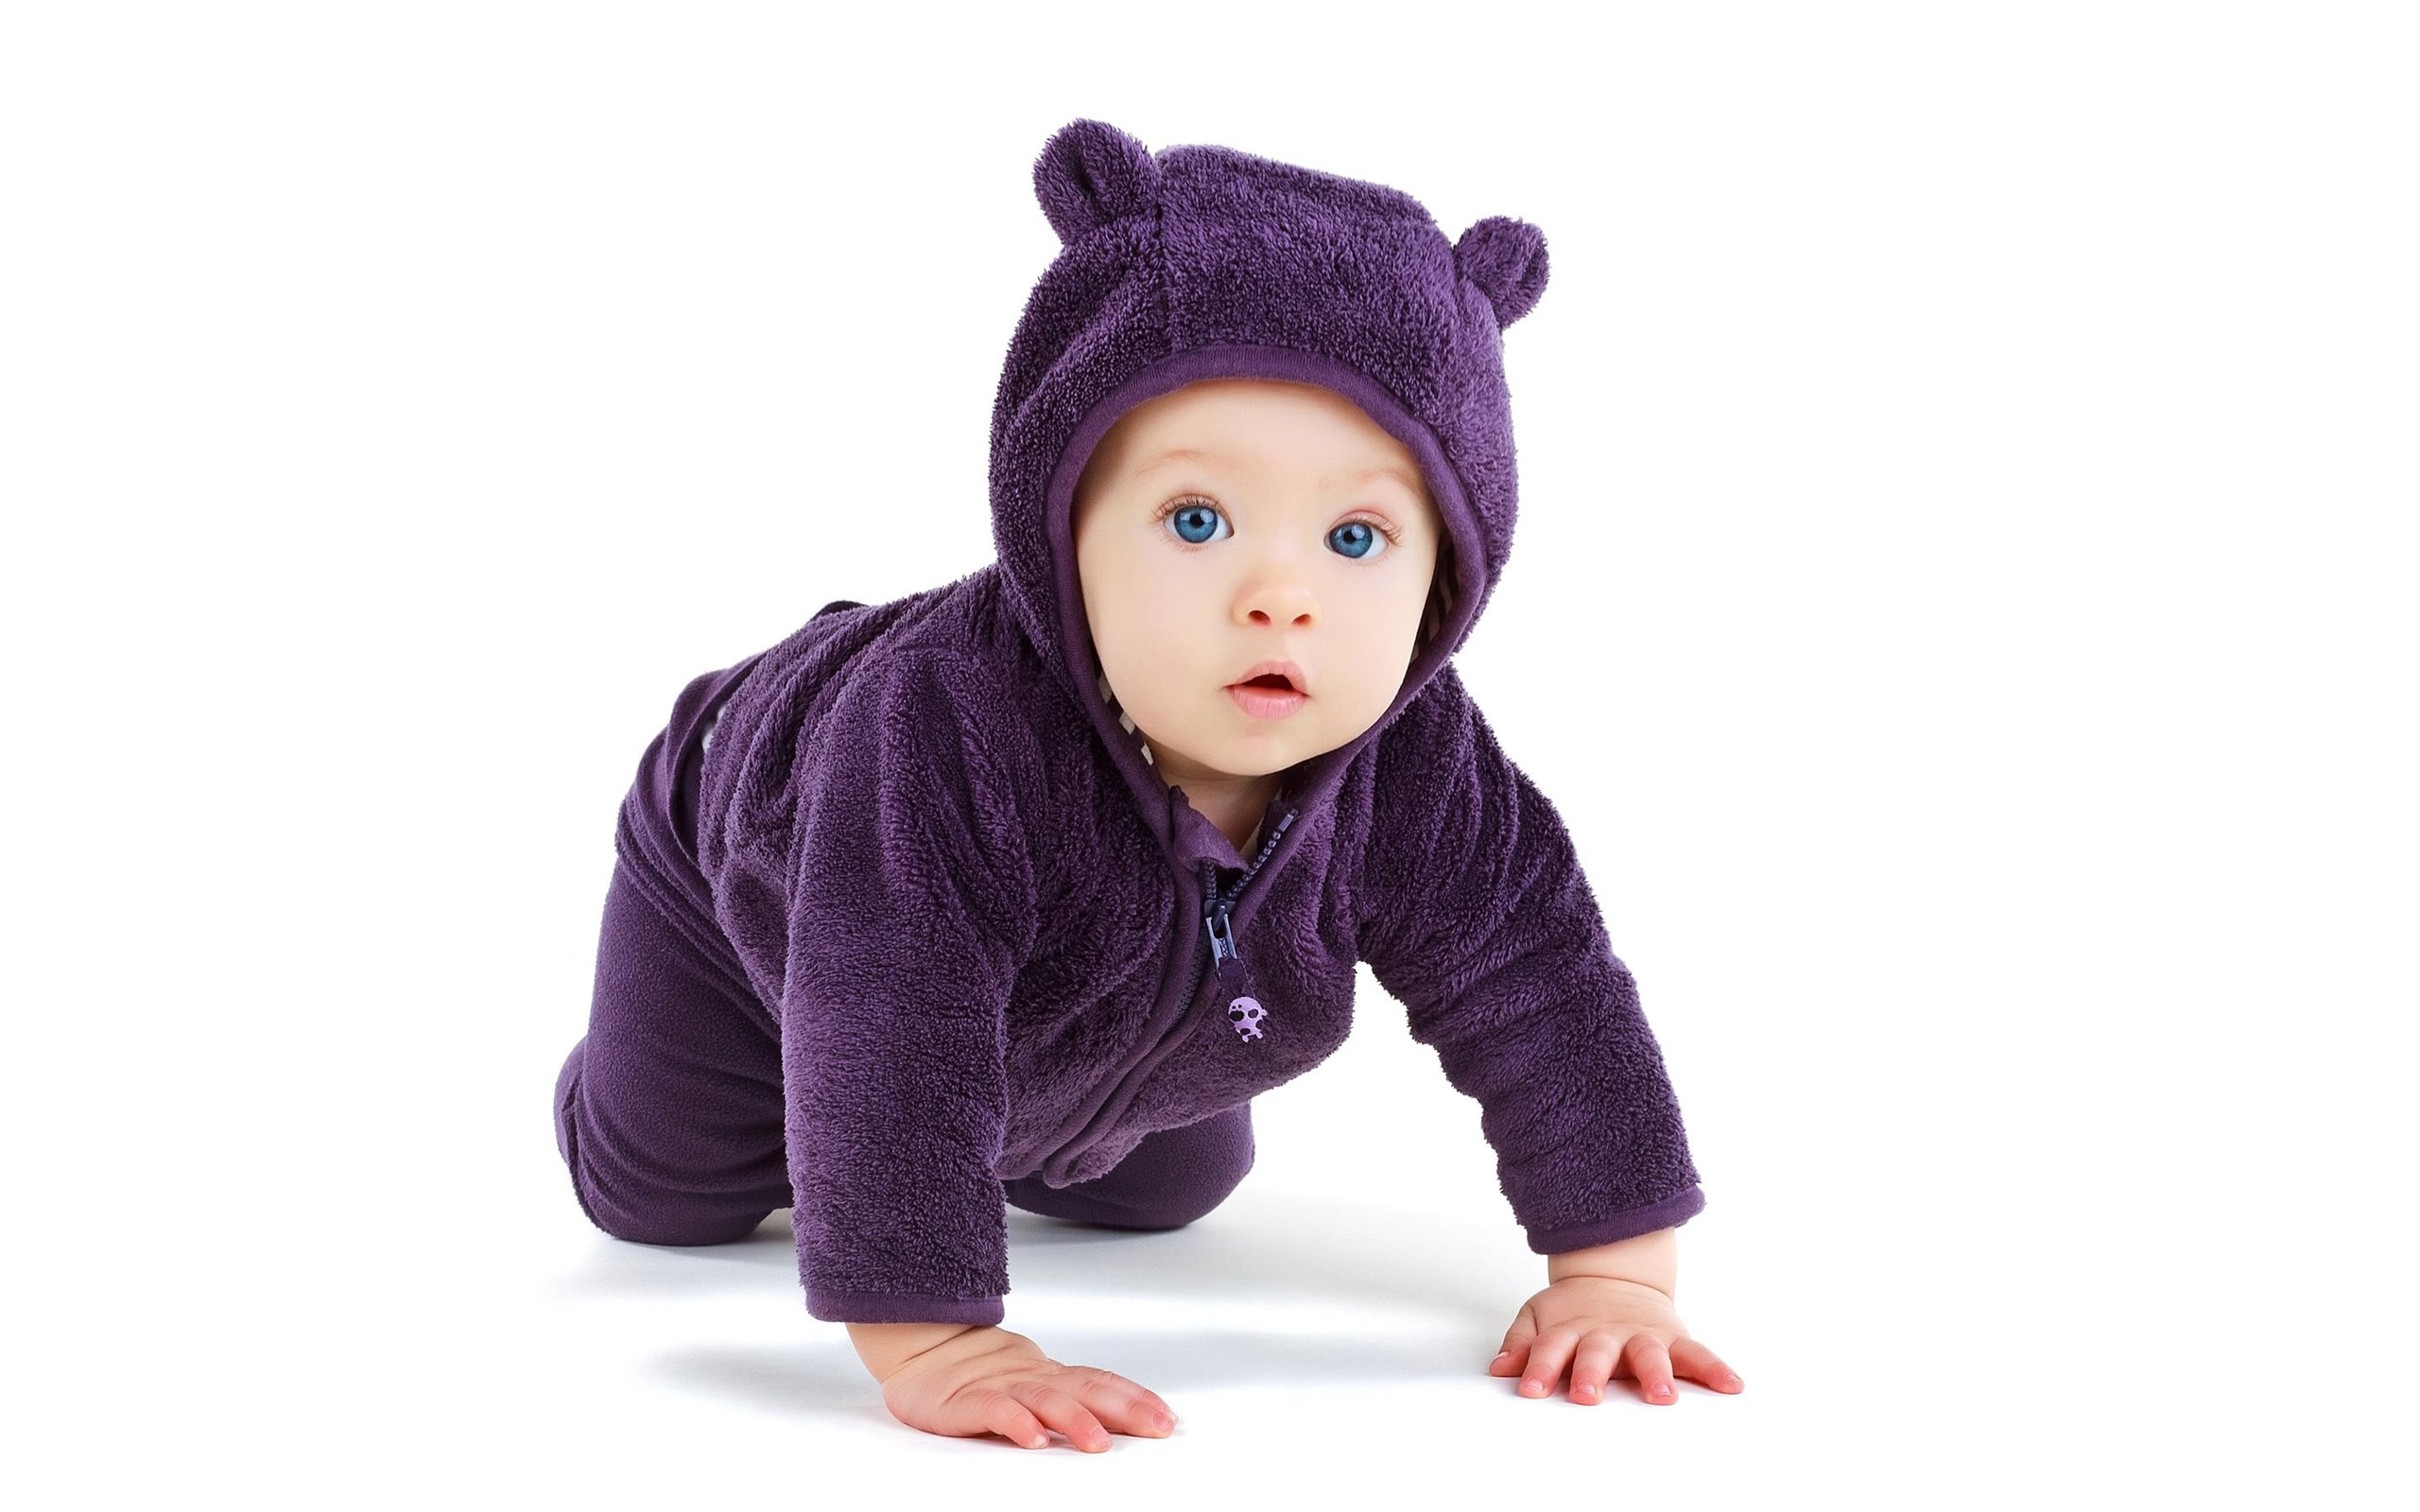 Download Cute Baby Child Wallpapers Widescreen Widescreen 16:10 2560x1600 D...